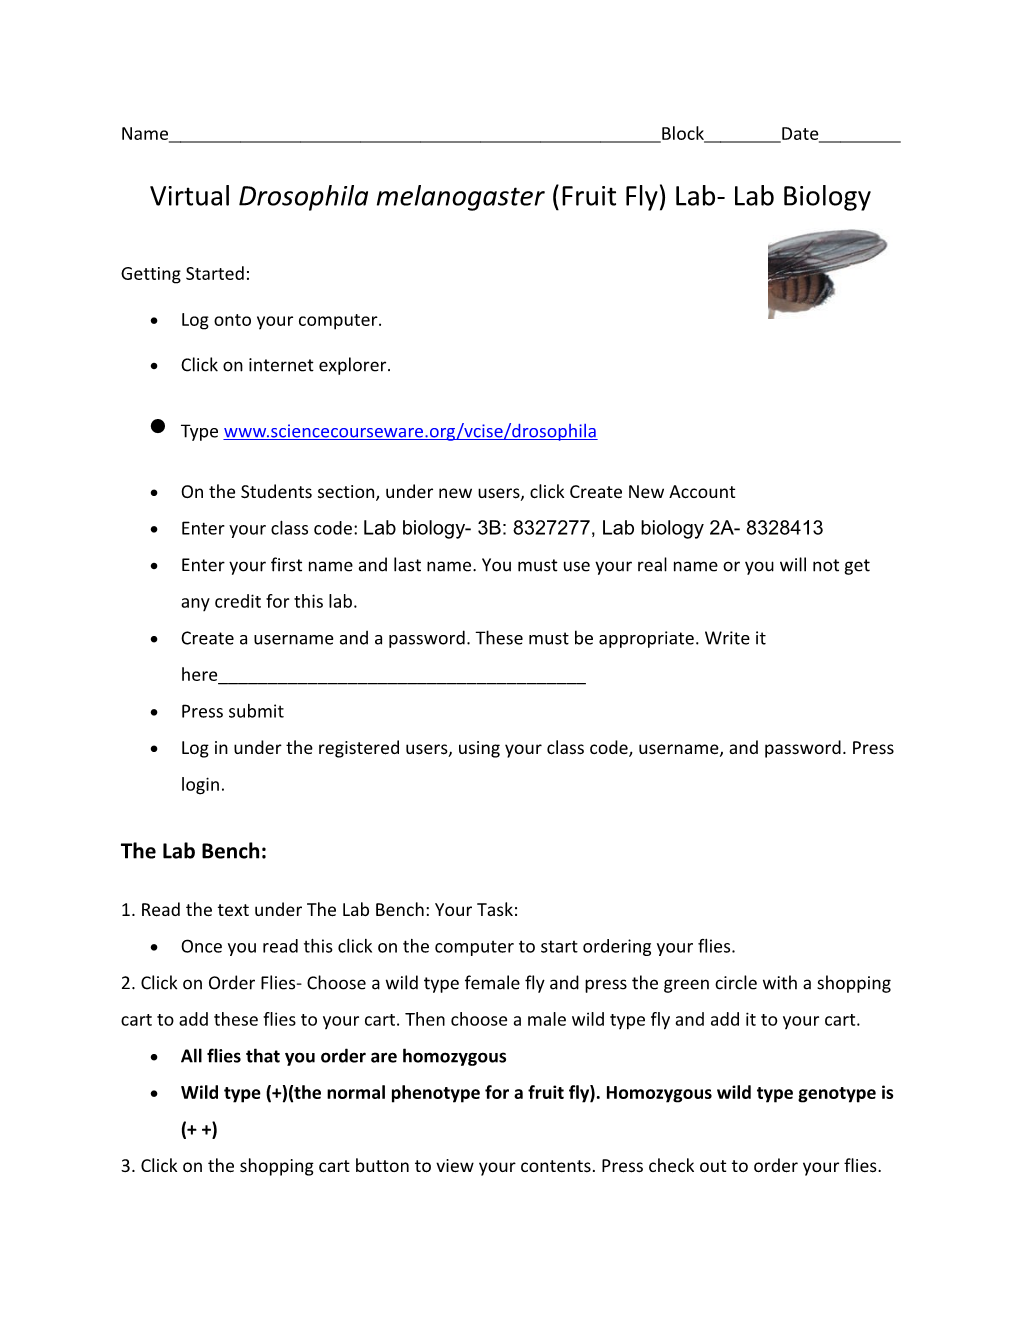 Virtual Drosophila Melanogaster (Fruit Fly) Lab- Lab Biology